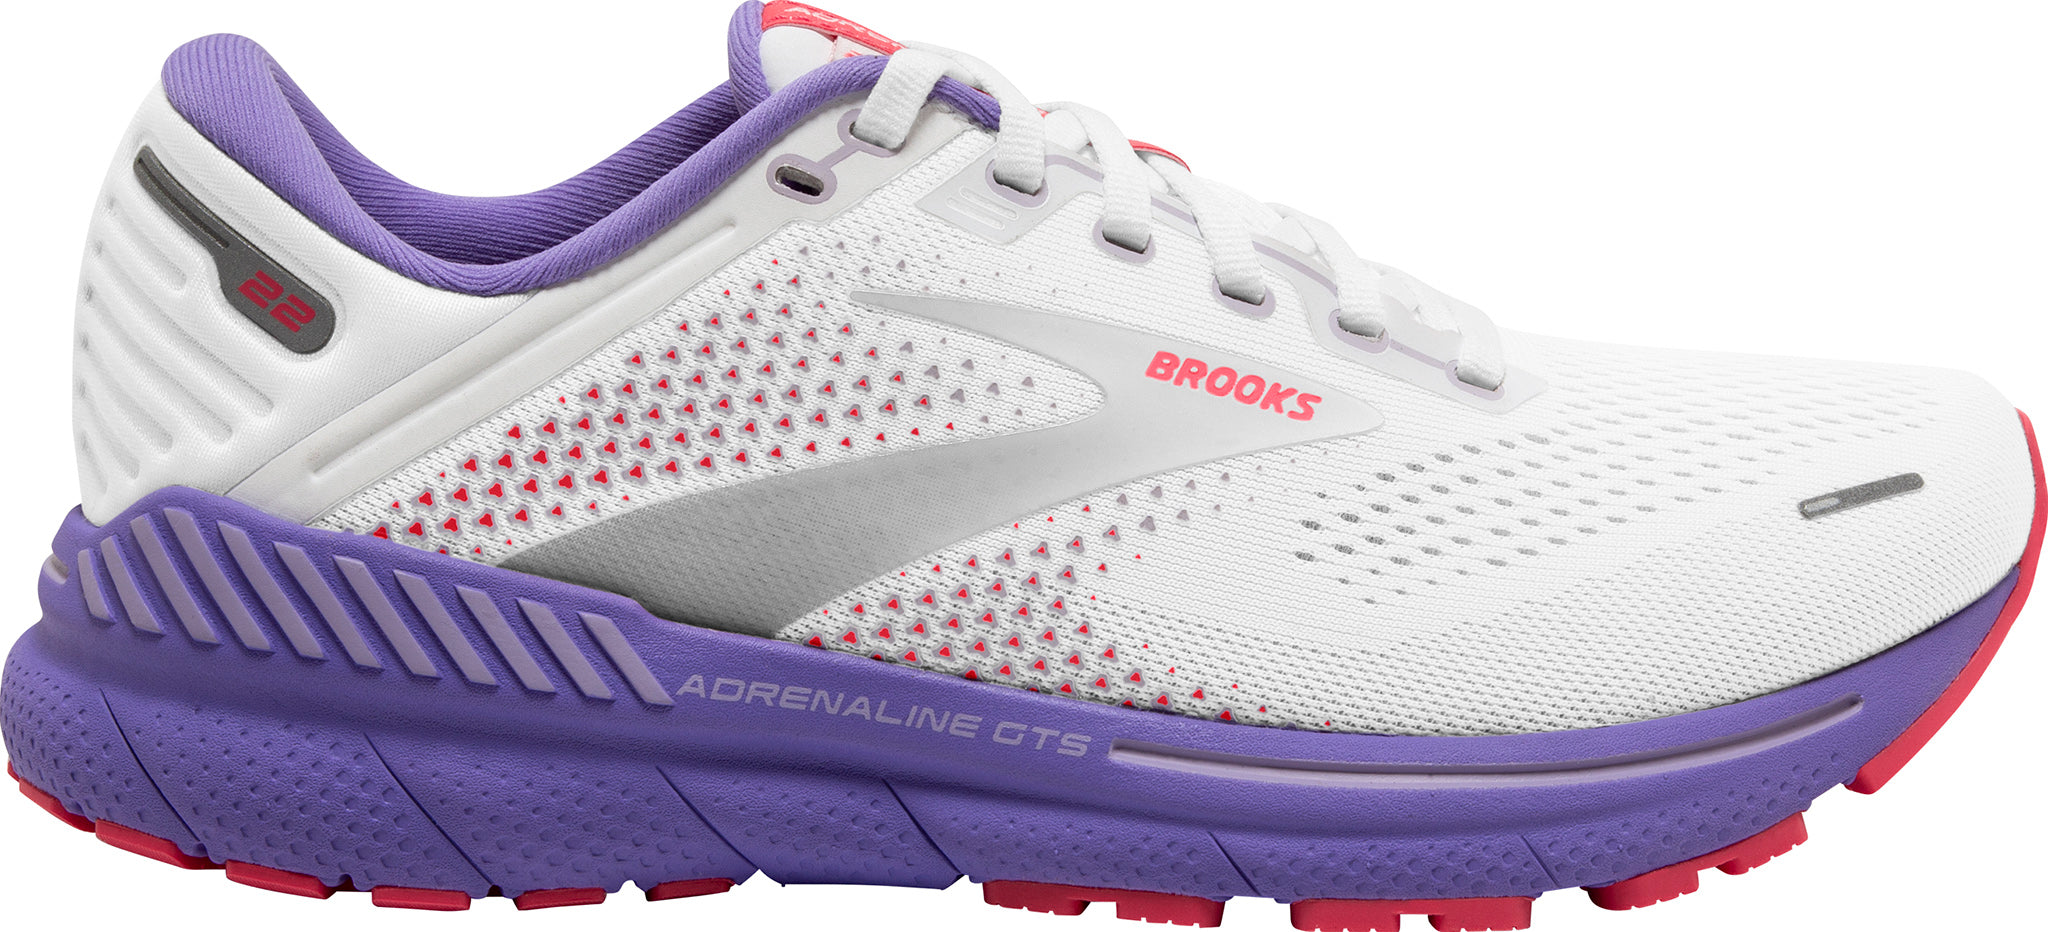 Brooks Launch GTS 9 Running Shoes - Women's